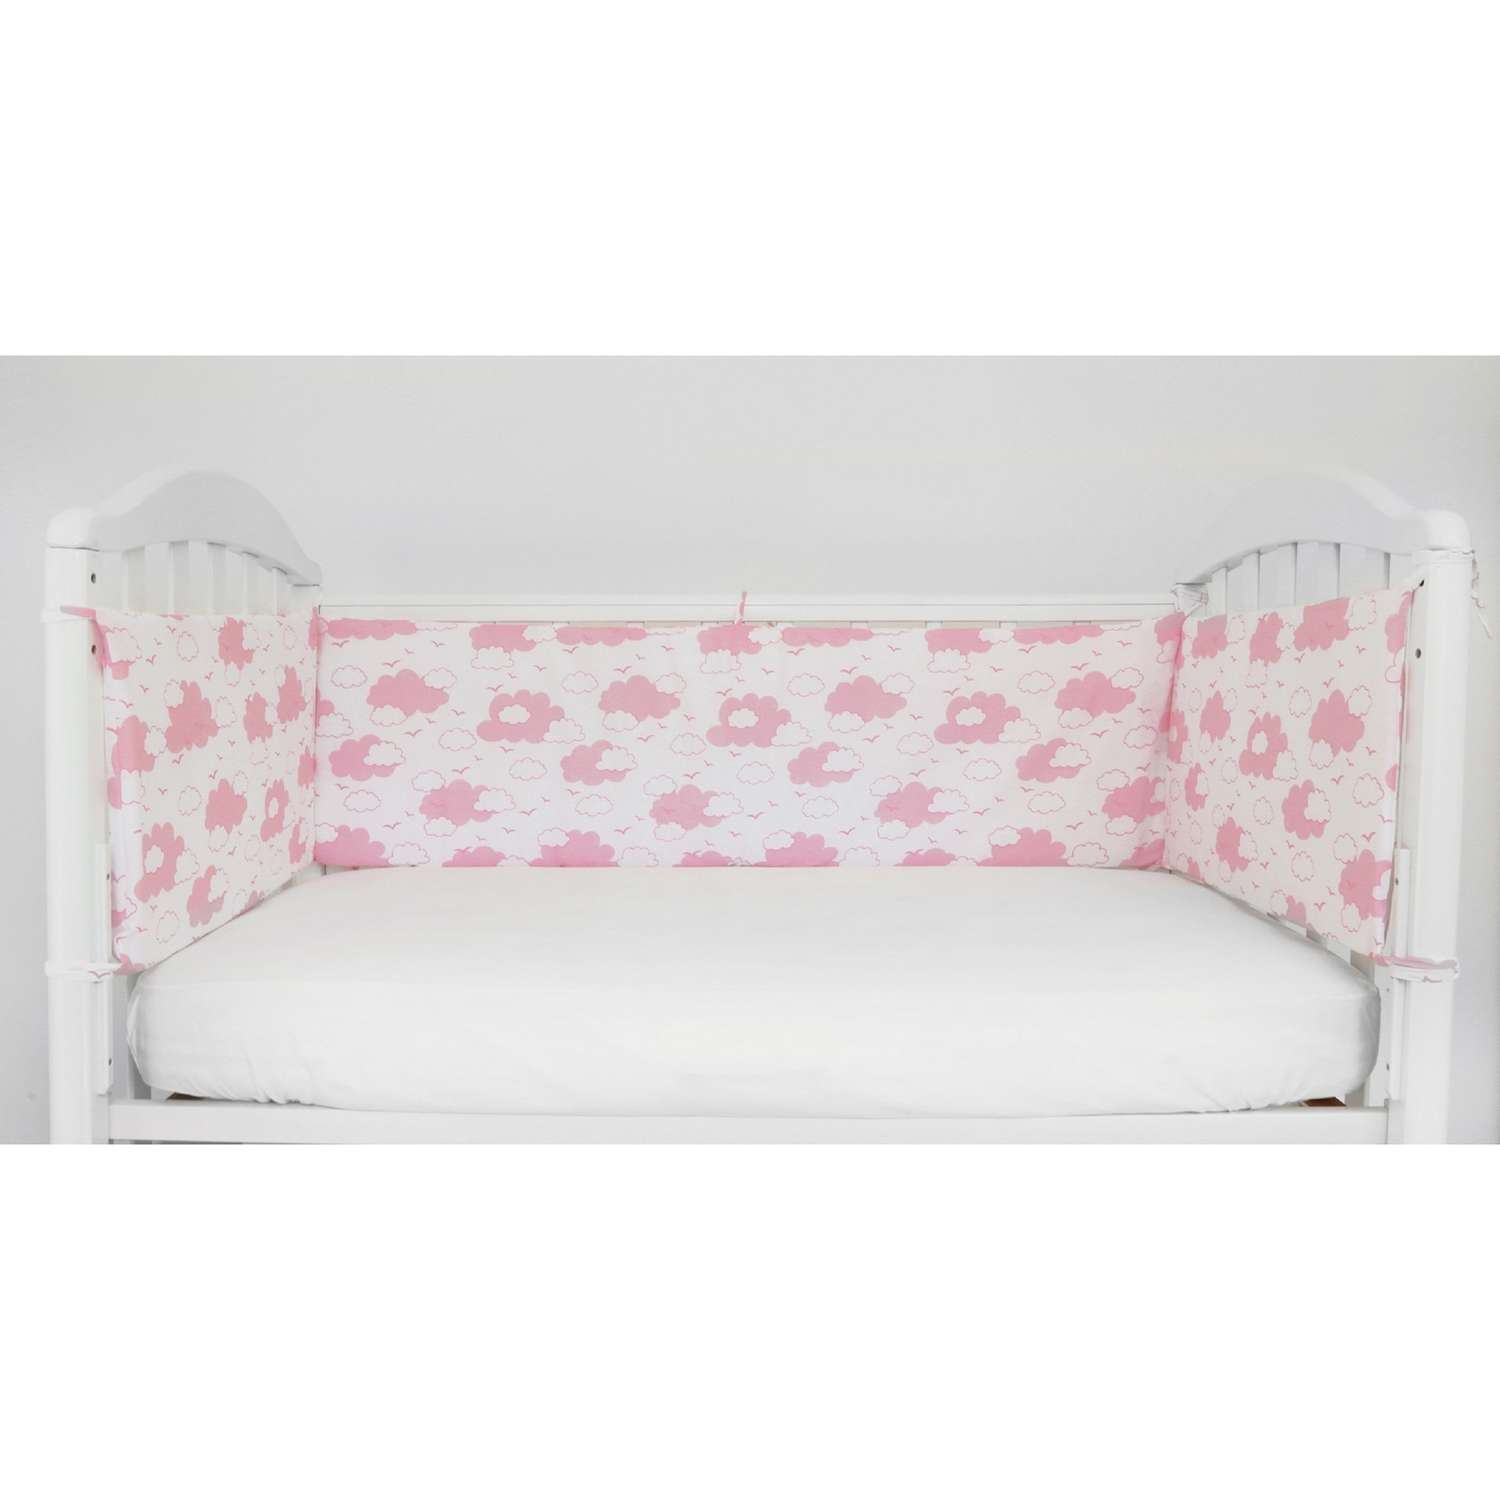 Борт в кроватку Споки Ноки Облака Розовый DMS211/6RO - фото 6